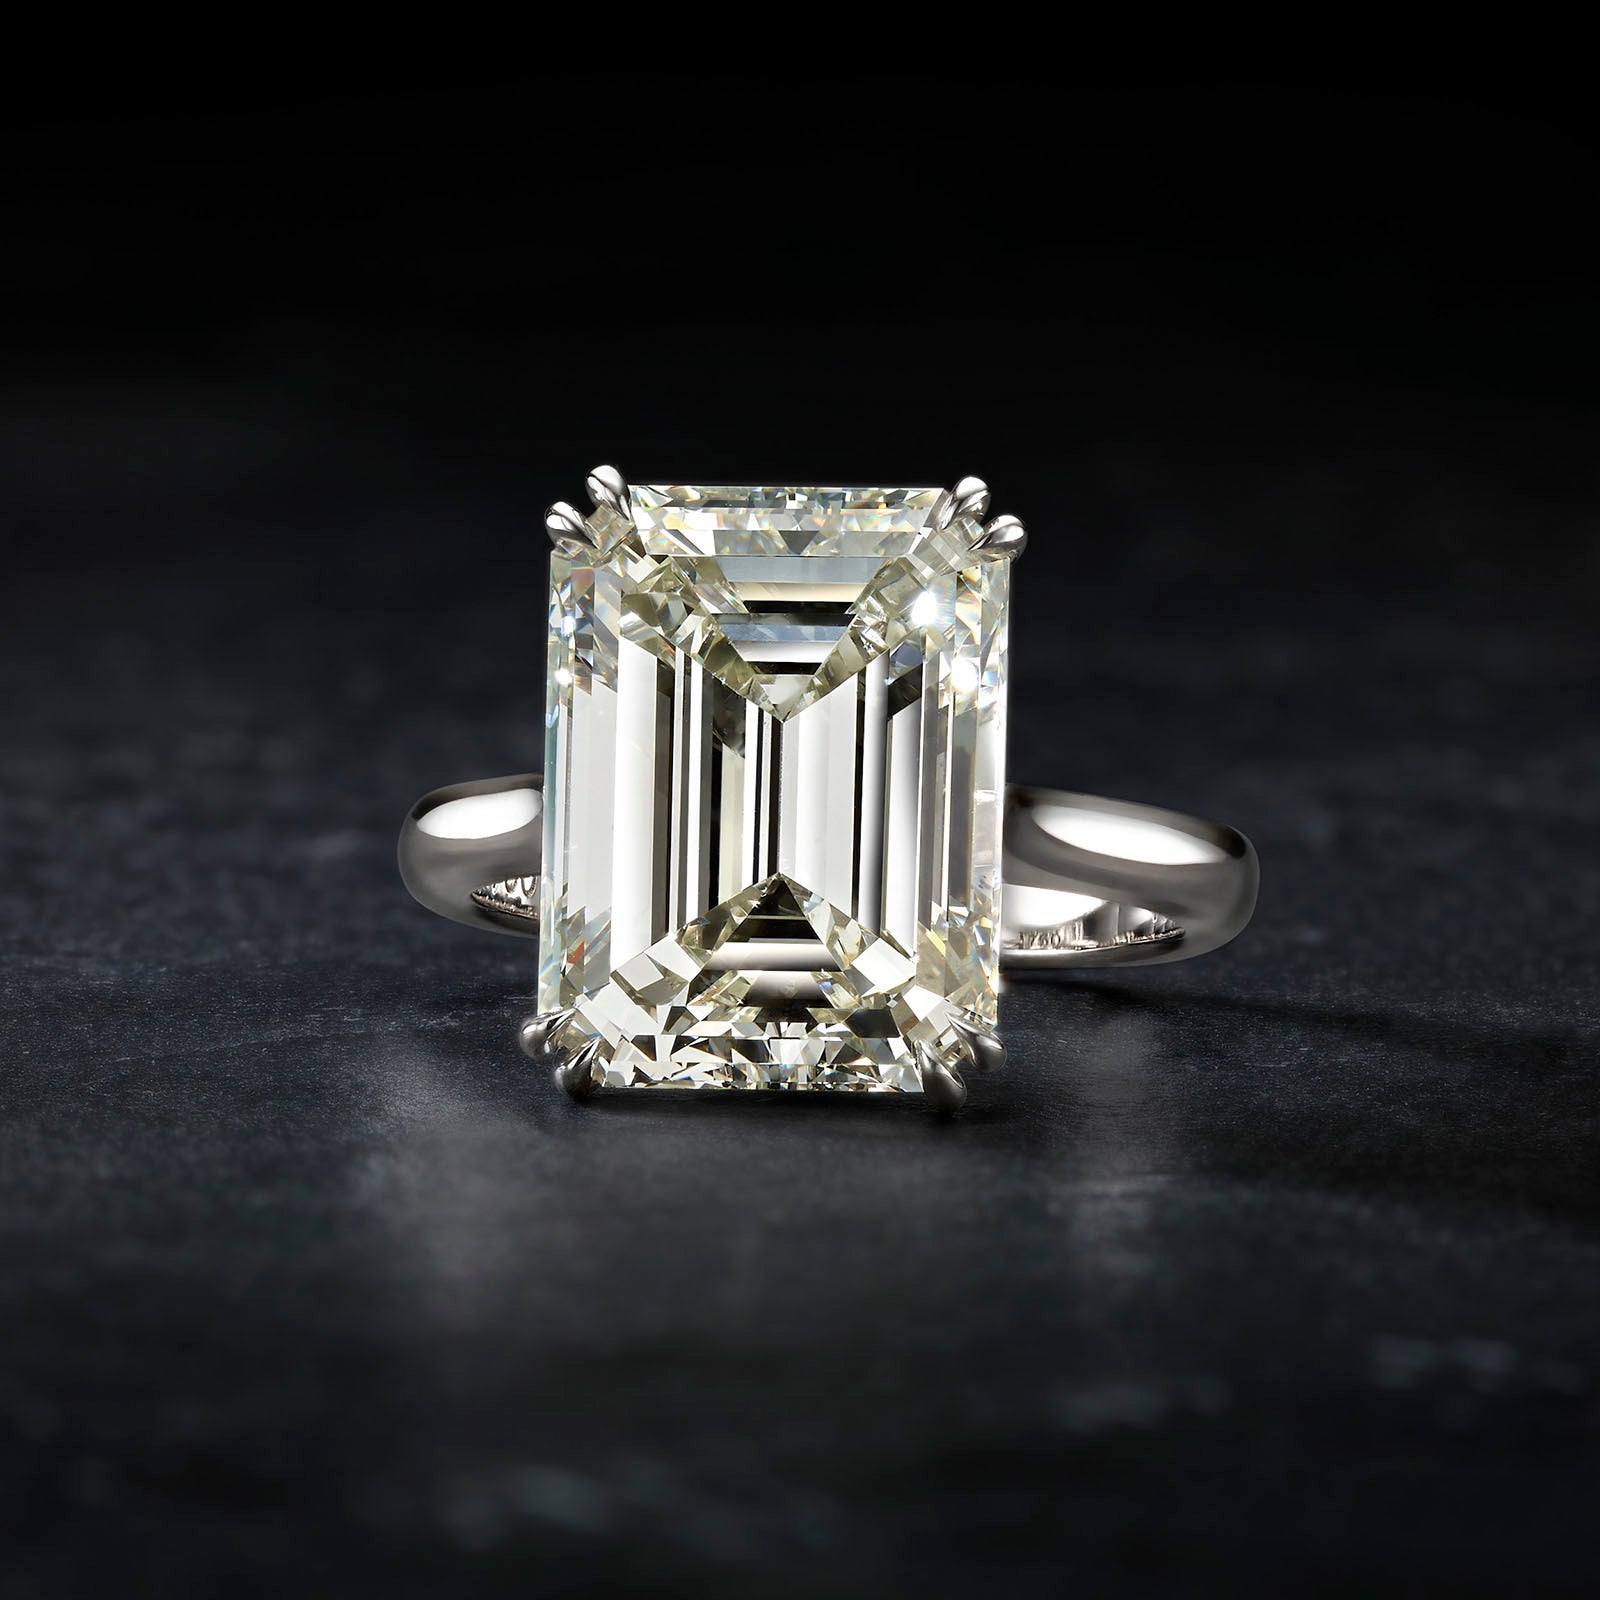 Emerald Cut Diamond Ring - 10.05ct TW